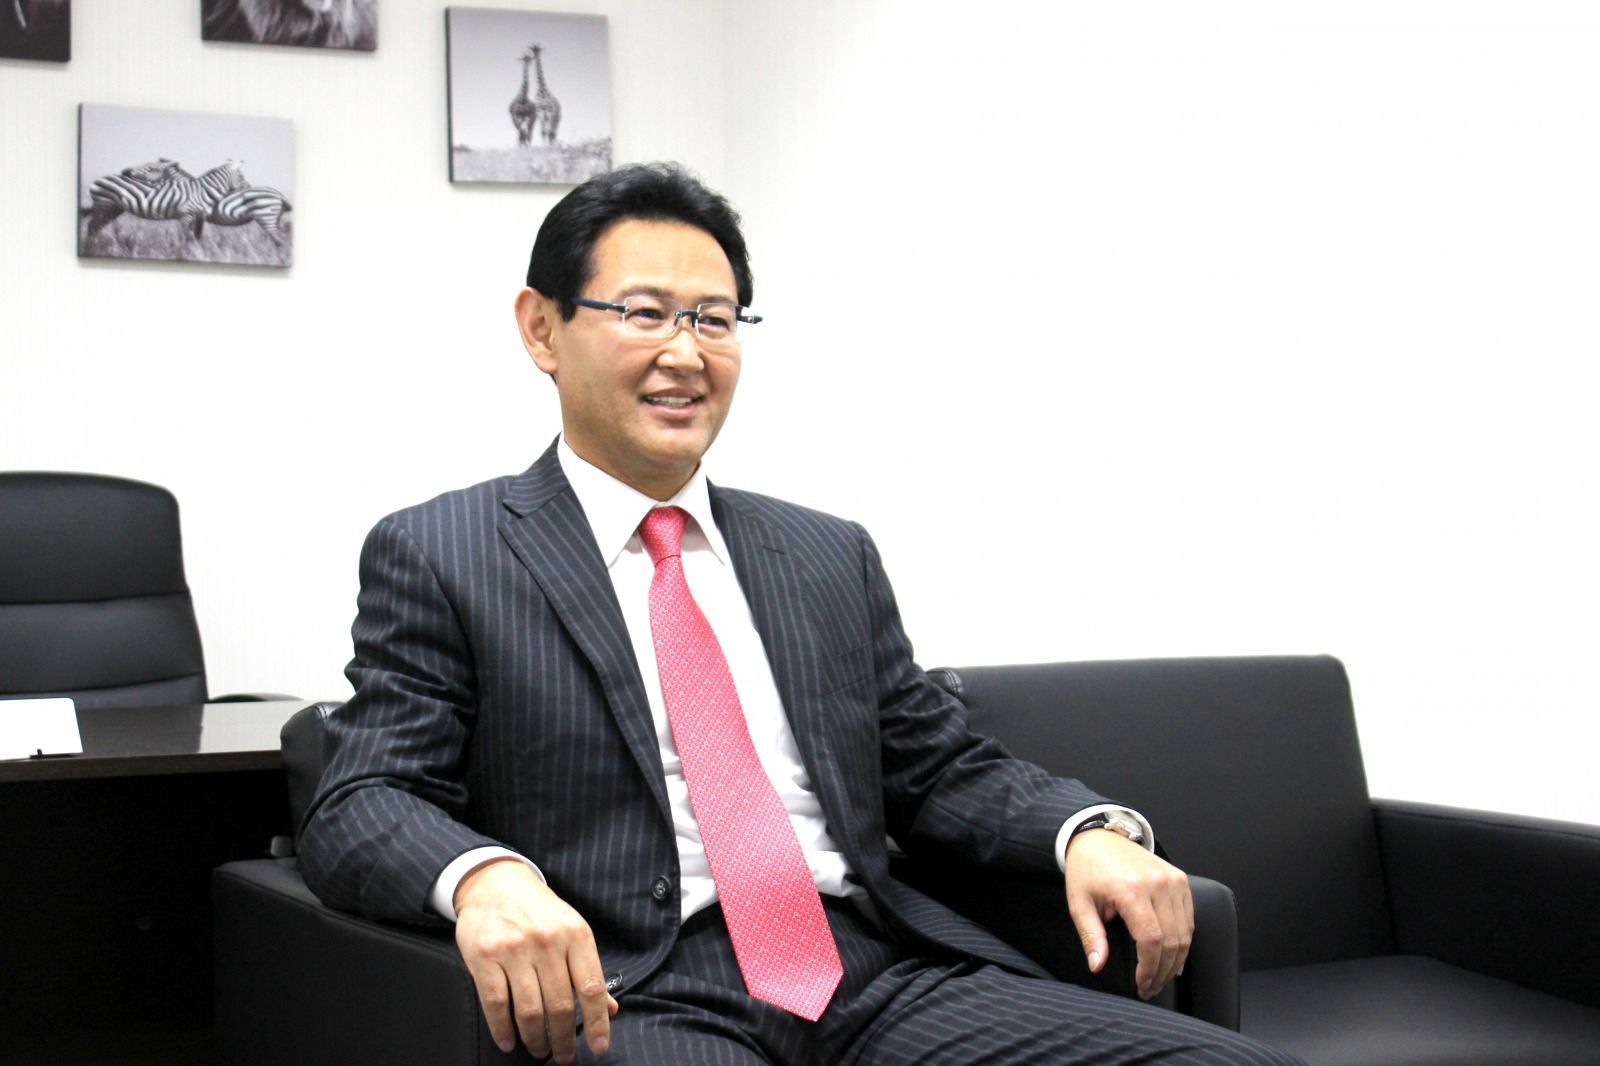 Glionグループ ジーライオンの代表取締役社長に菊地 秀武が就任 今後のビジョンについてのインタビュー記事を公開 自動車業界のリーディングカンパニーへ Newscast